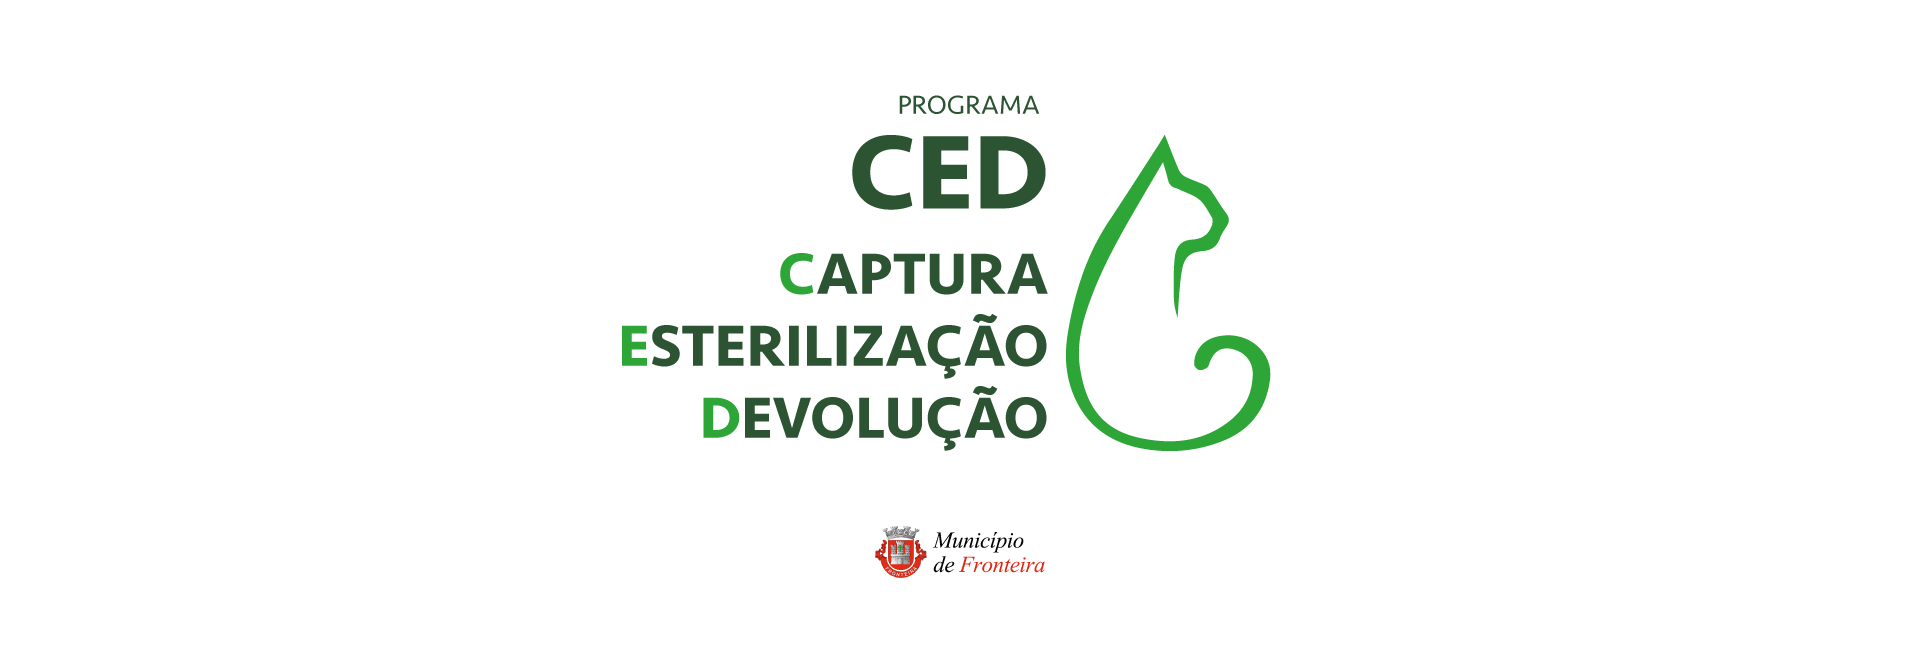 (Português) Programa CED